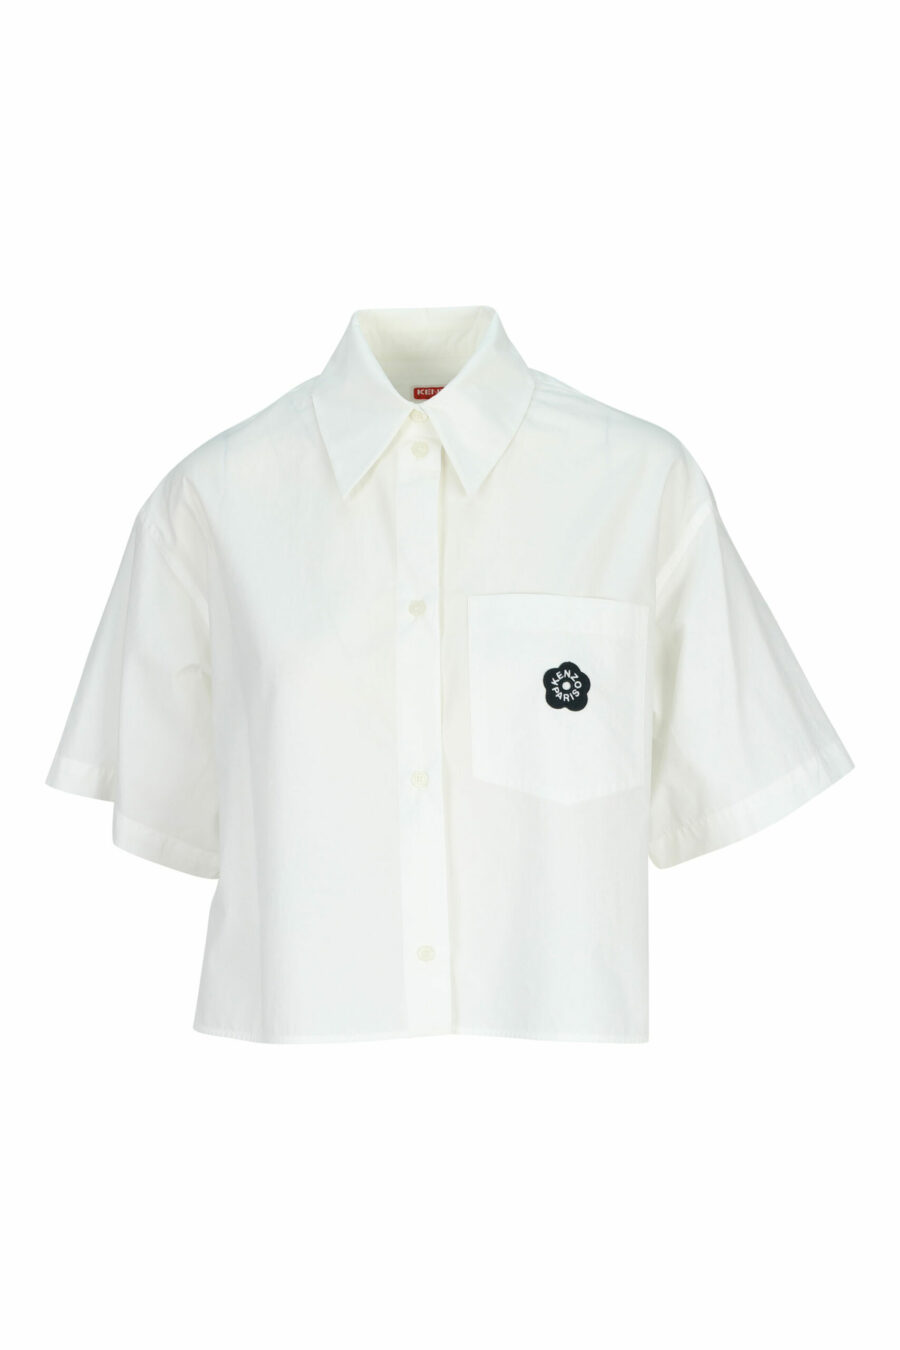 Camisa blanca manga corta con minilogo "boke flower" negro - 3612230589063 scaled